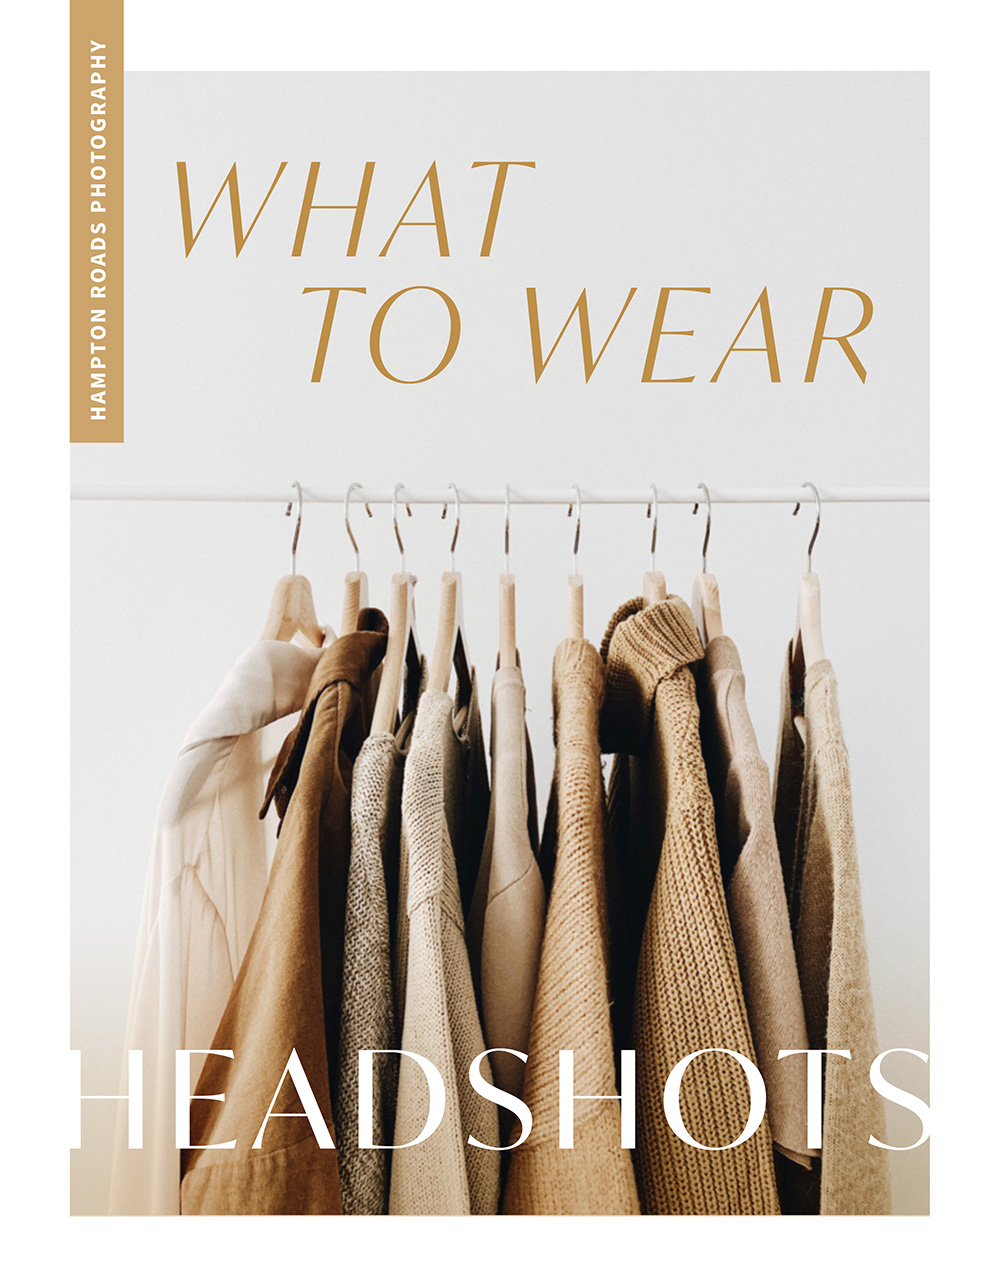 Headshots What to Wear